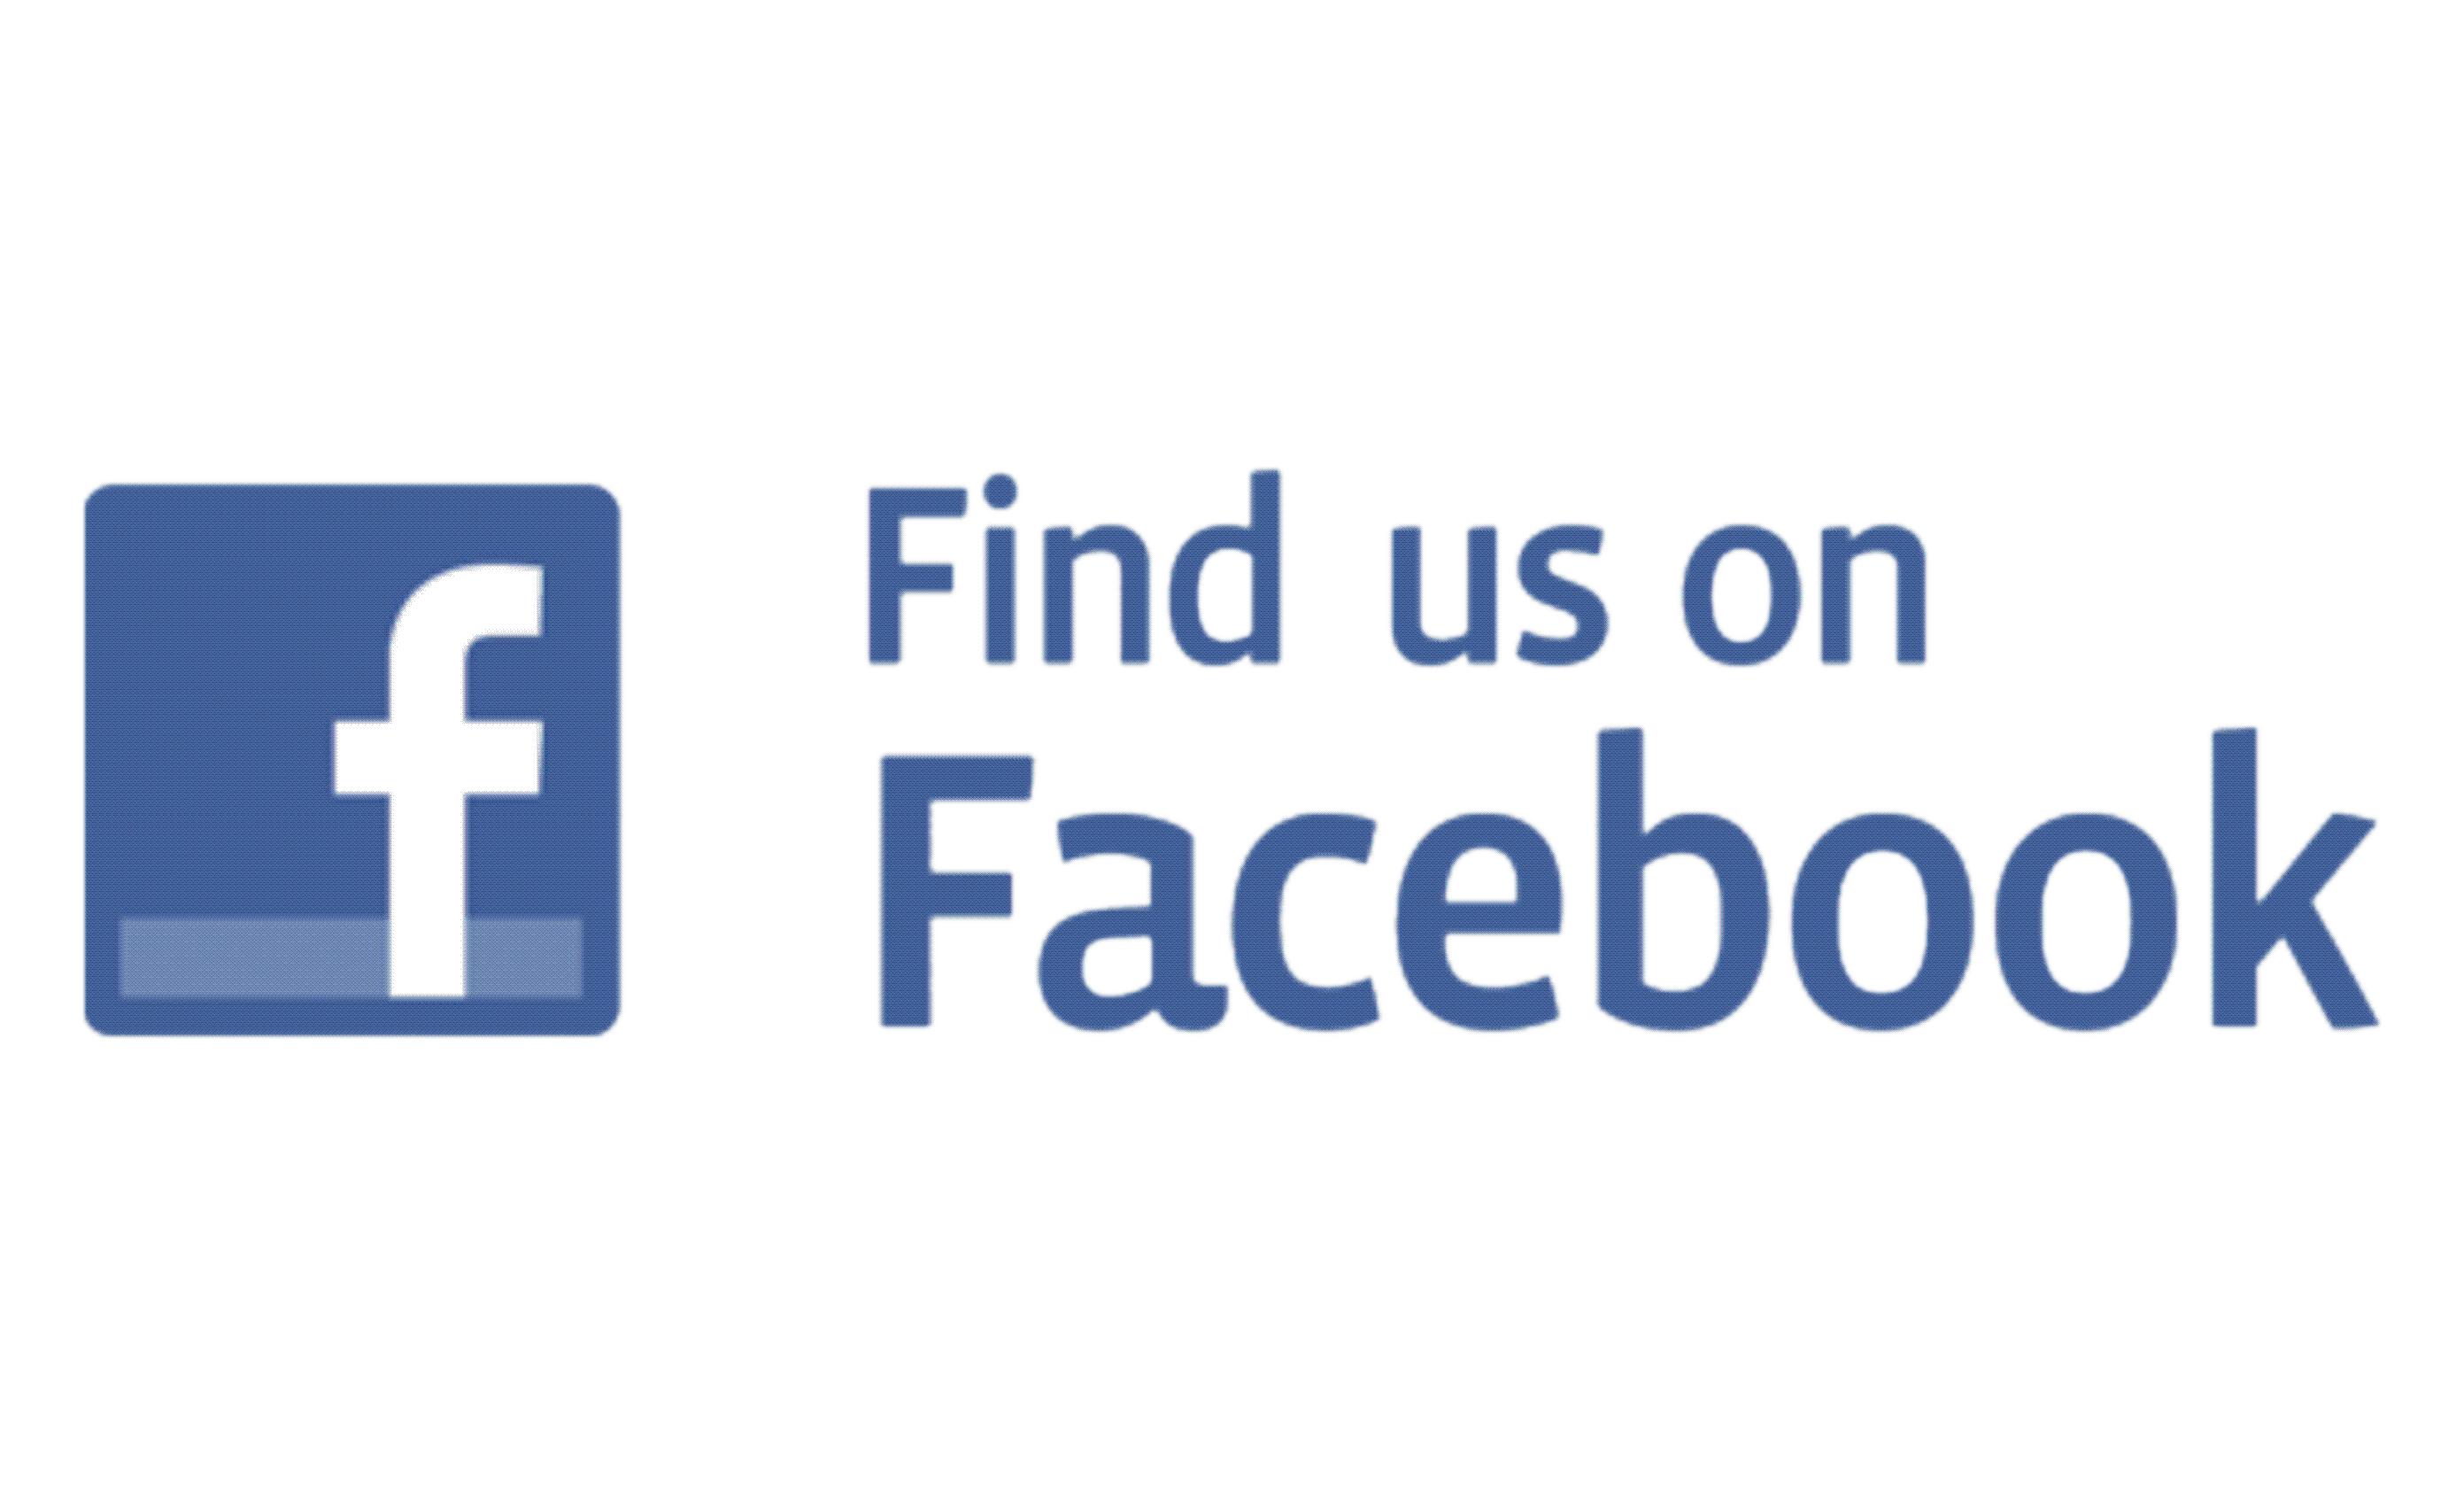 Find Us On Facebook Logo Image Png Transparent Background Free Download Freeiconspng